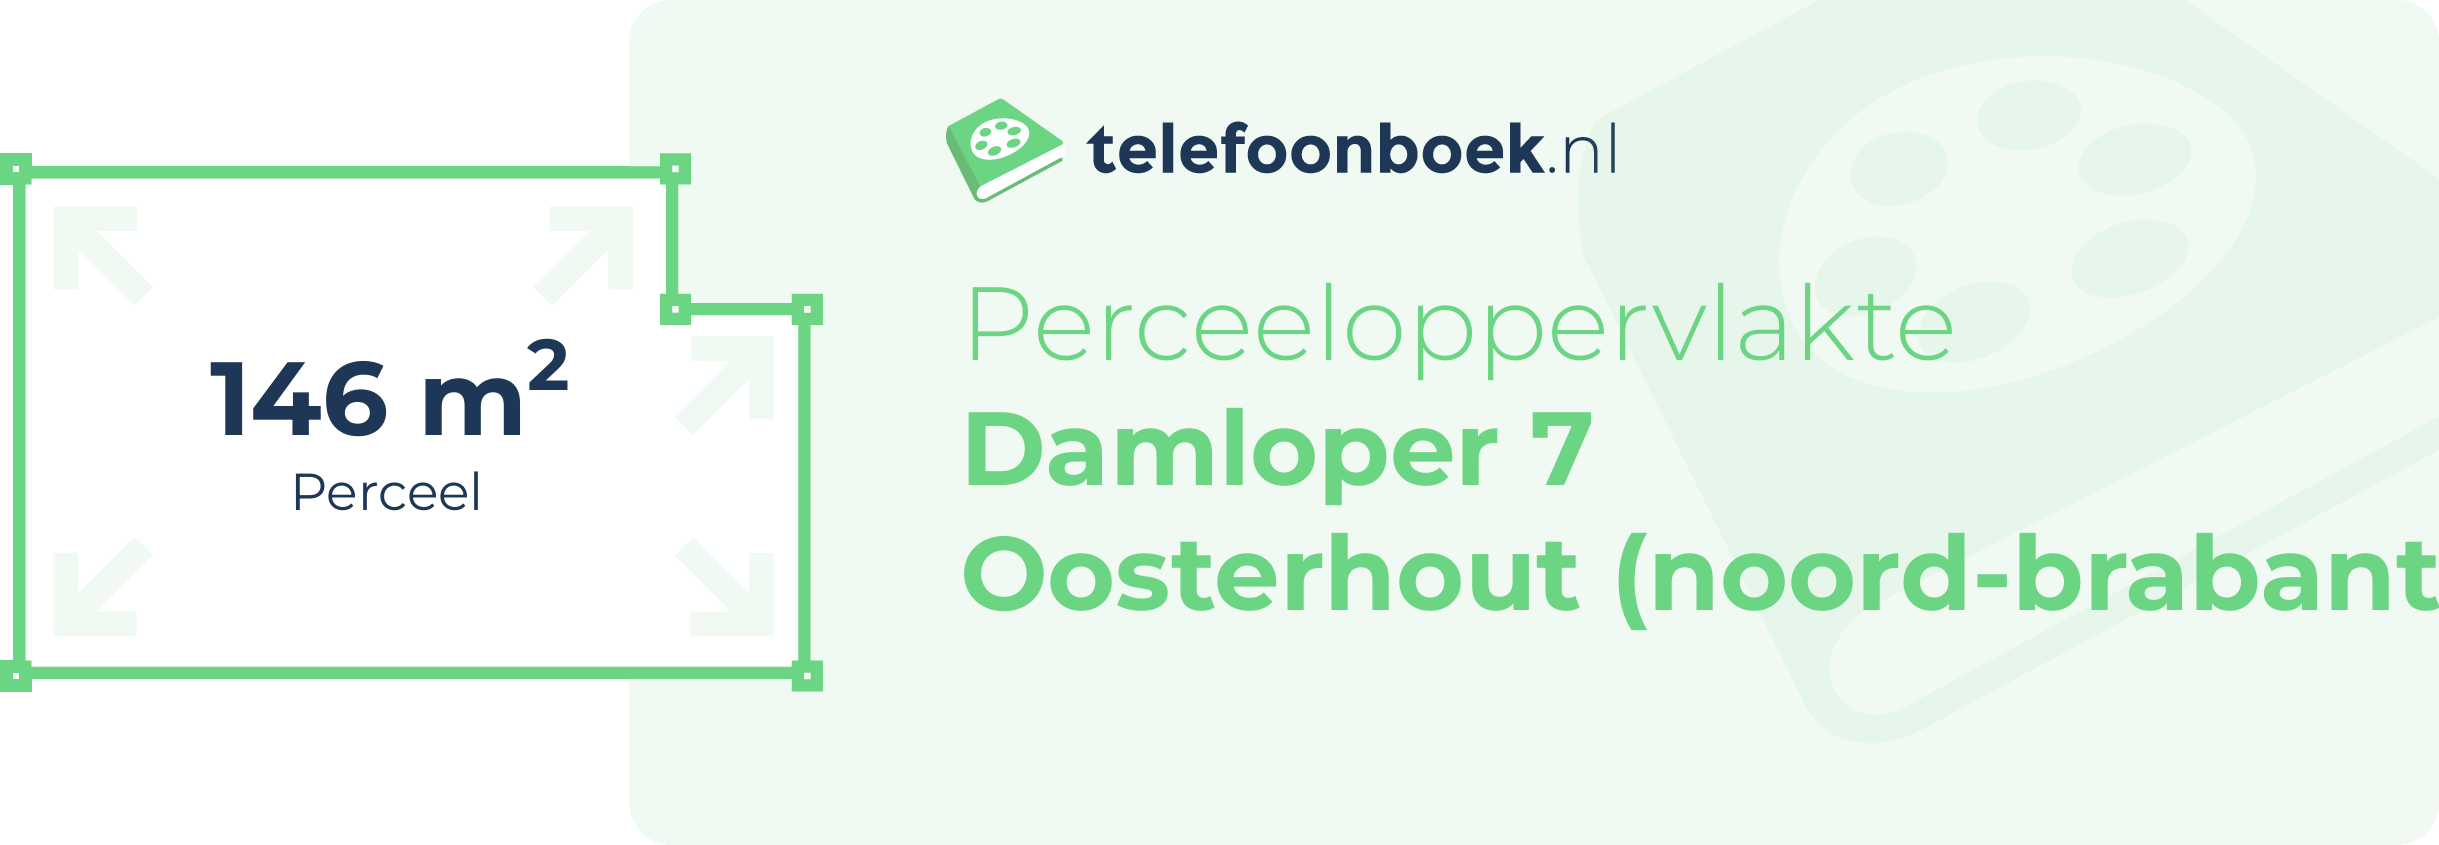 Perceeloppervlakte Damloper 7 Oosterhout (Noord-Brabant)